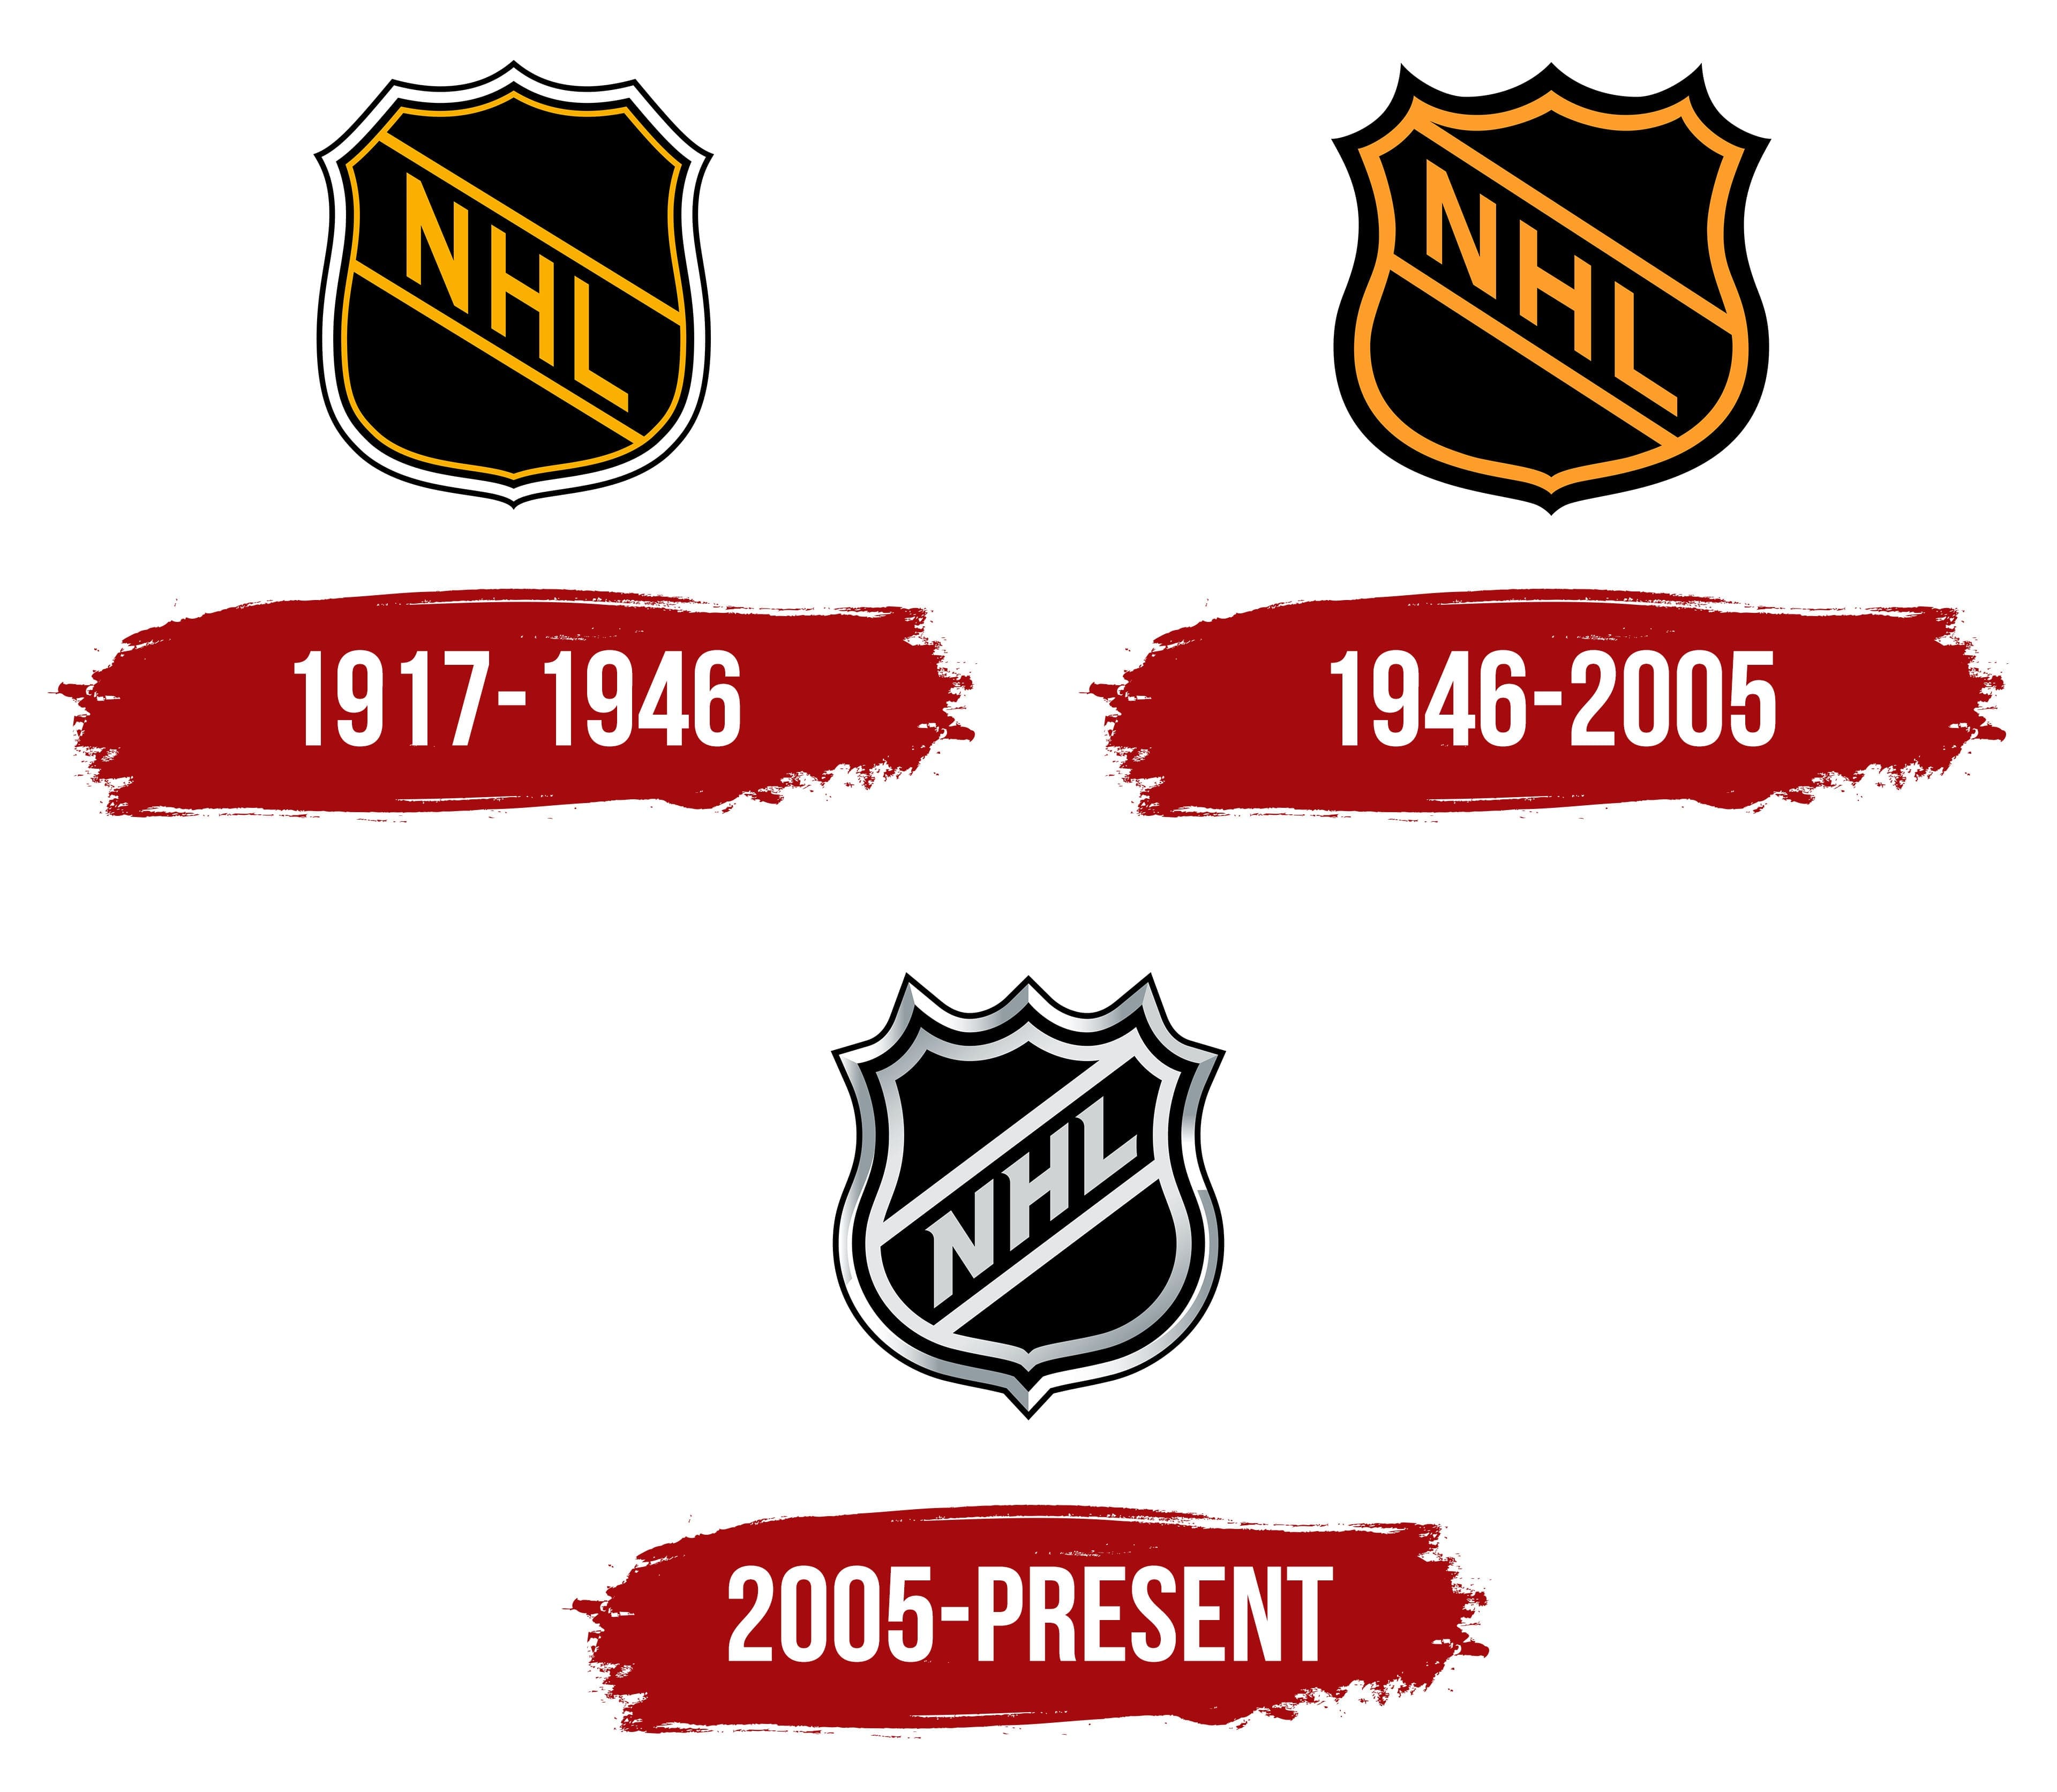 Logo of all 2021-2022 Season national hockey league teams. NHL